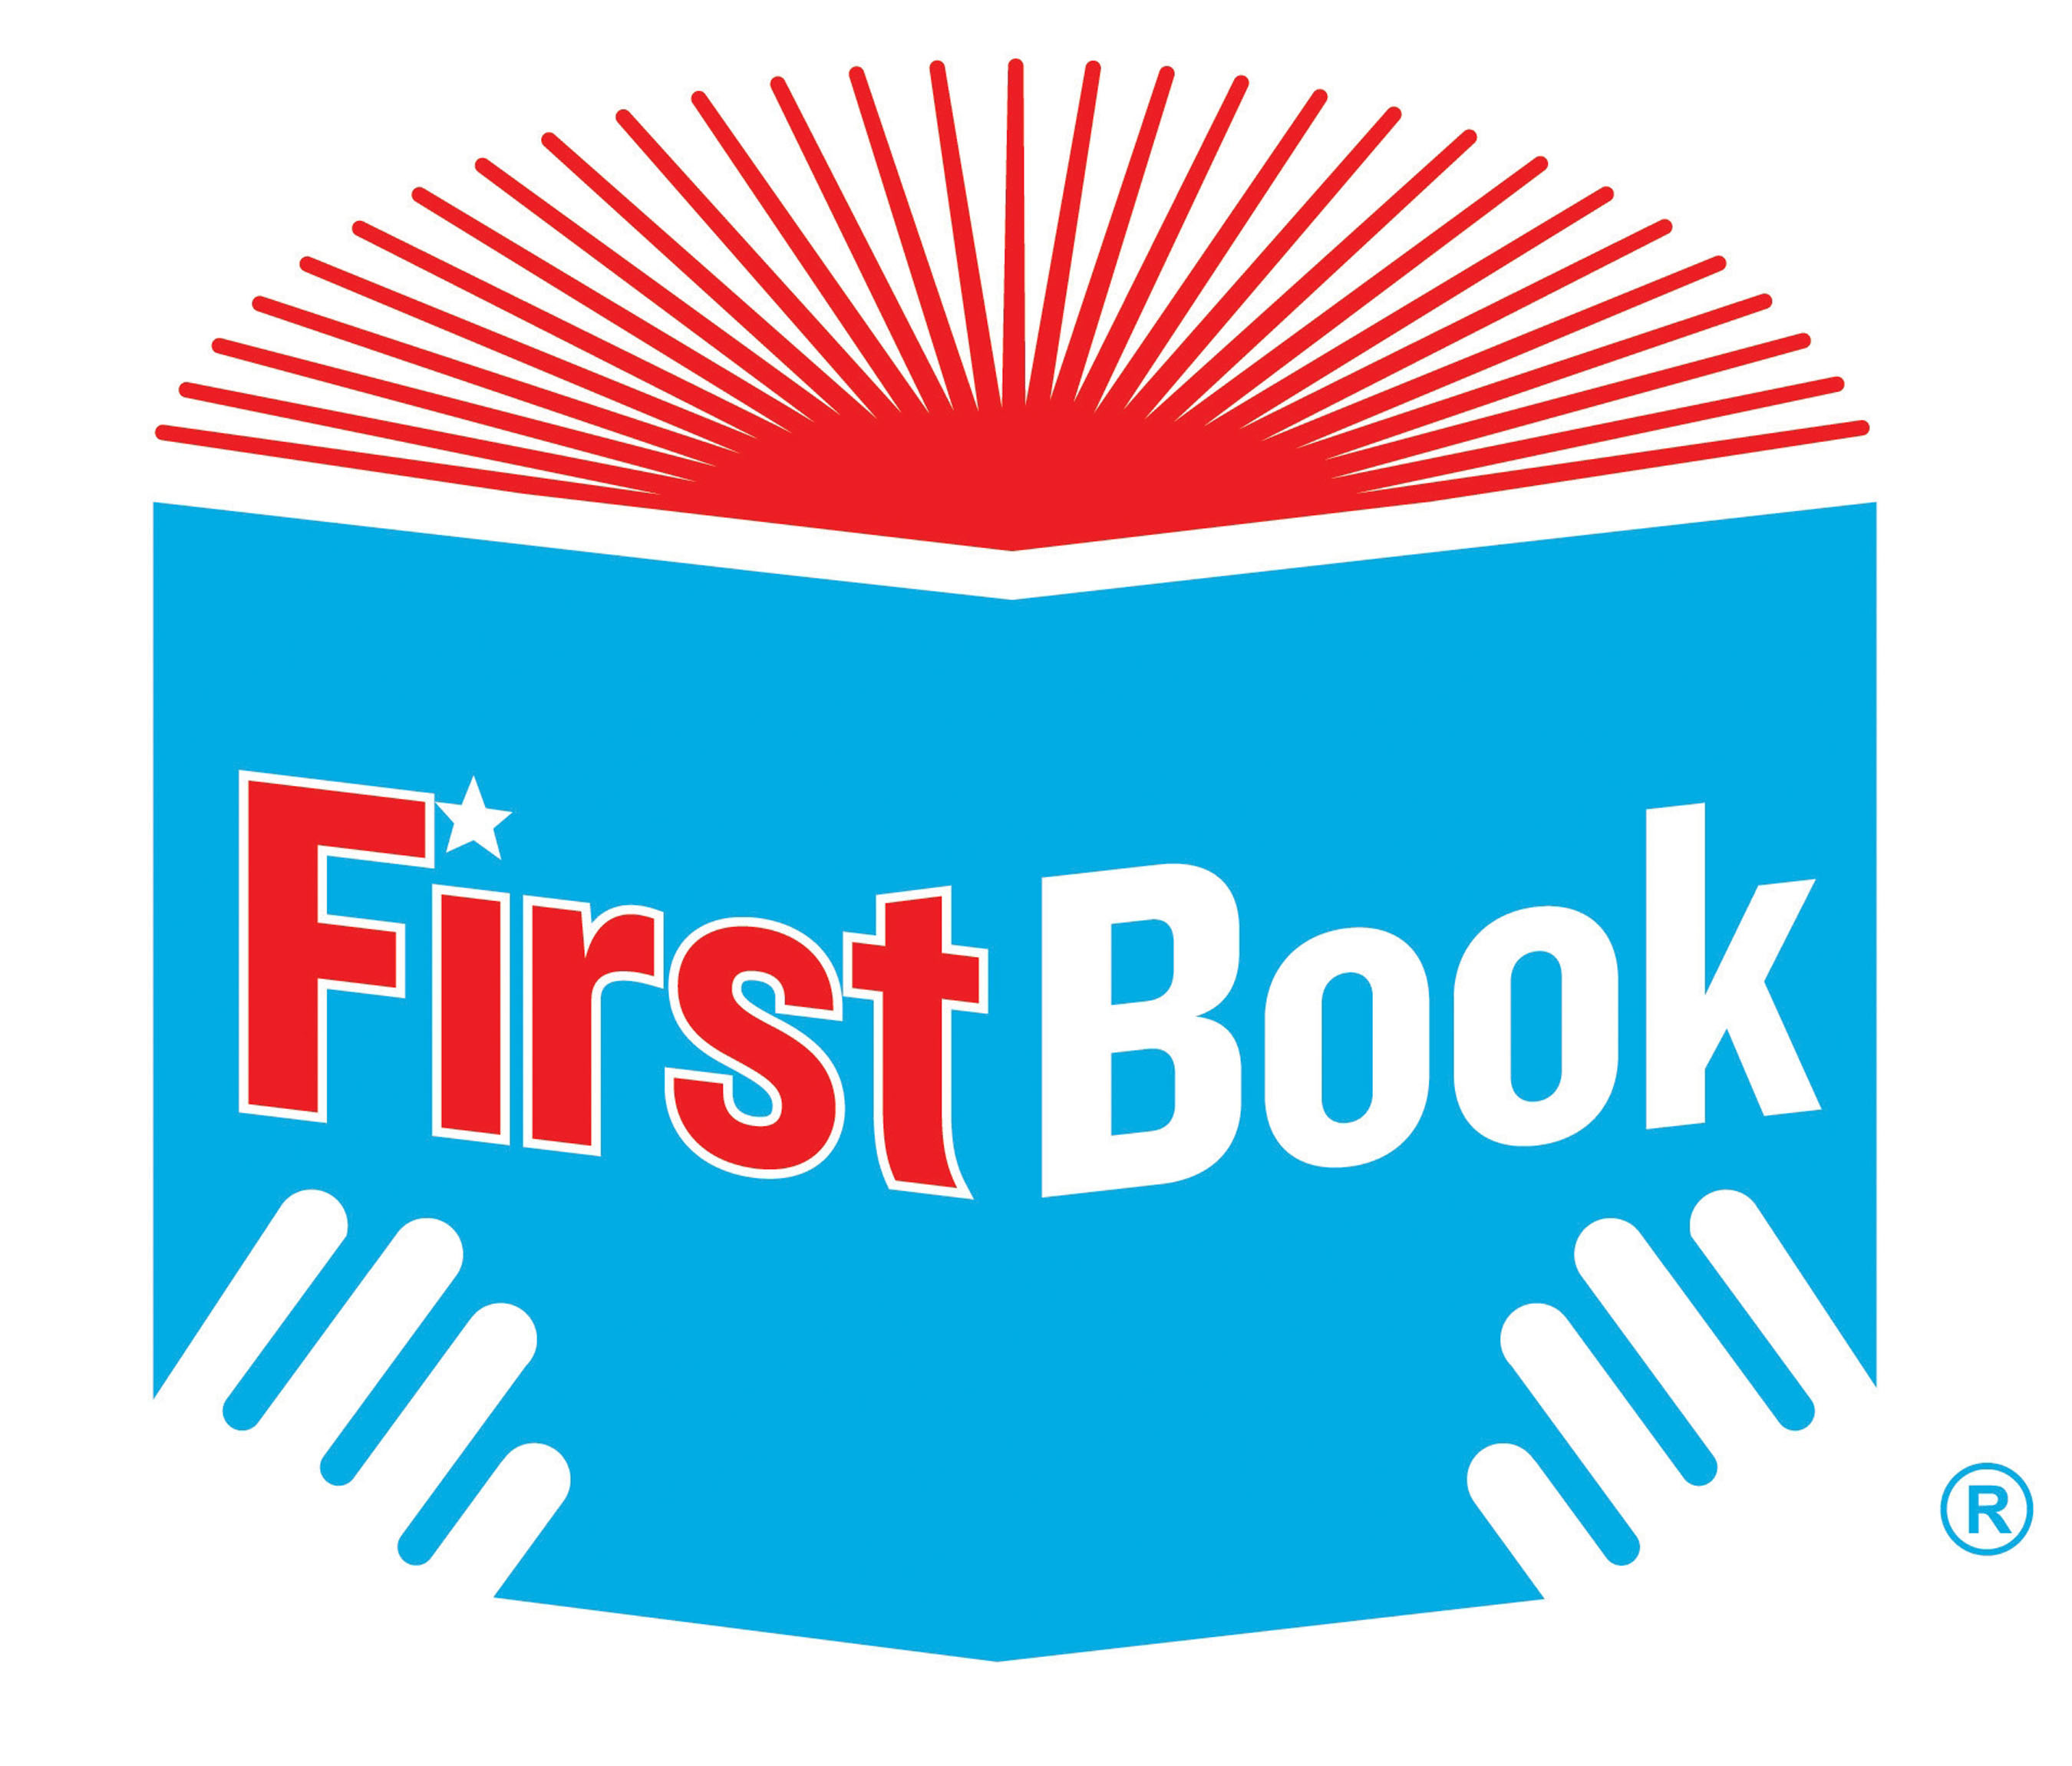 First Book logo. (PRNewsFoto/First Book) (PRNewsFoto/)